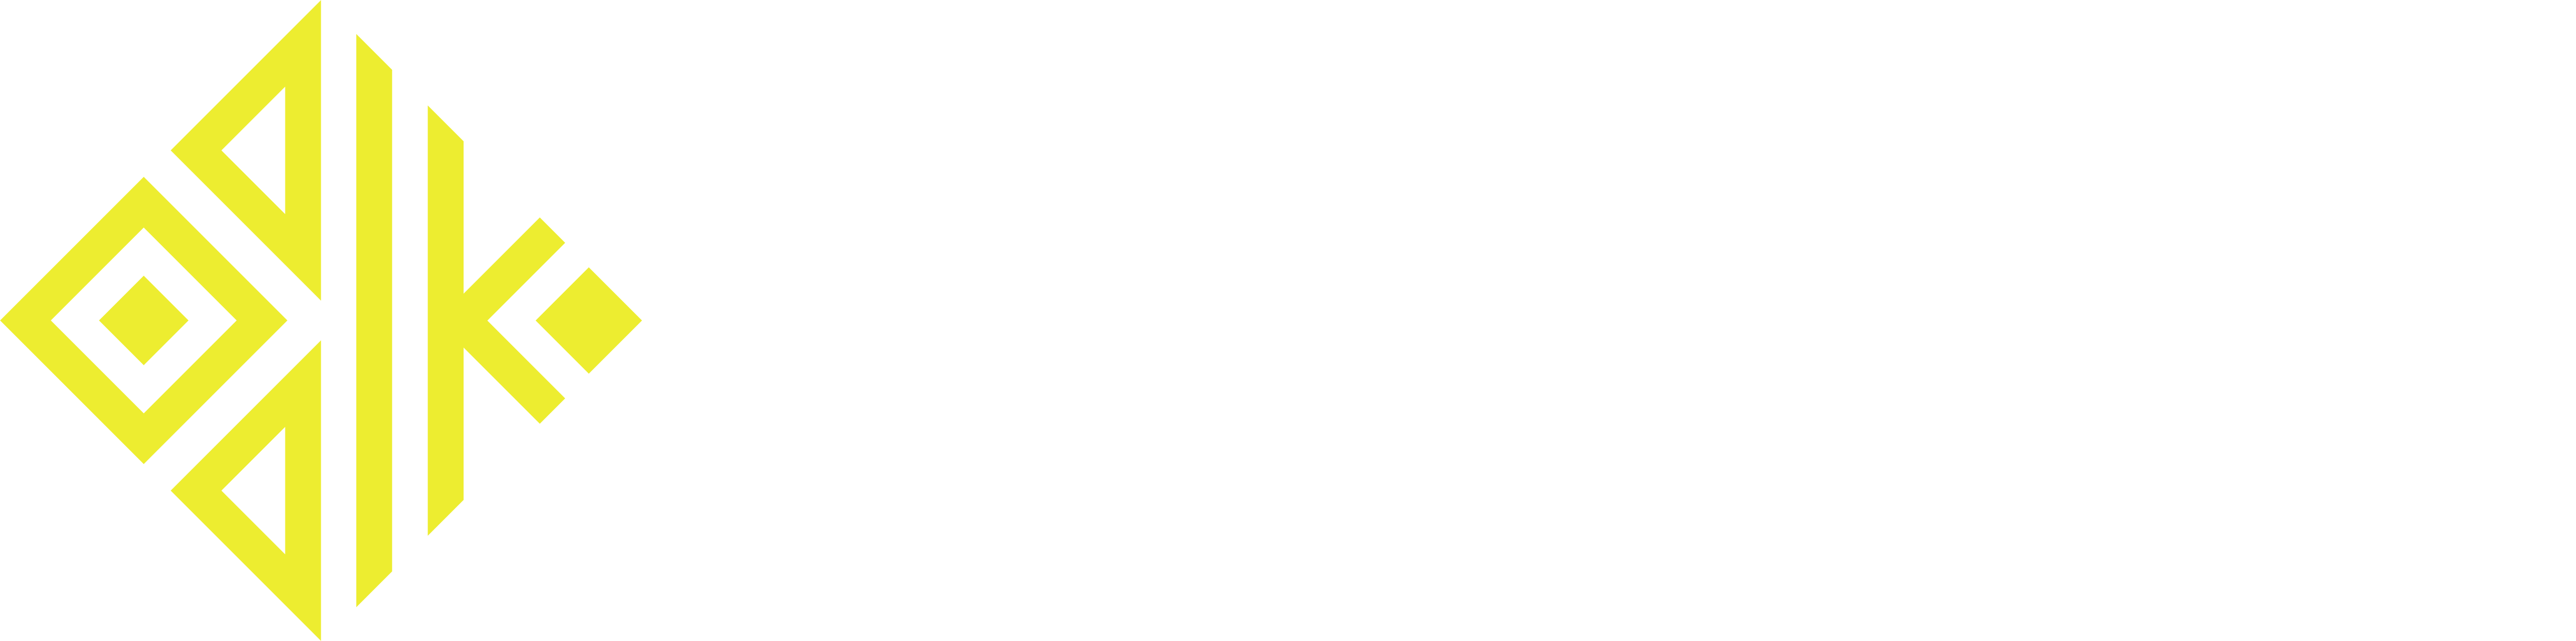 Oddik Bright team logo